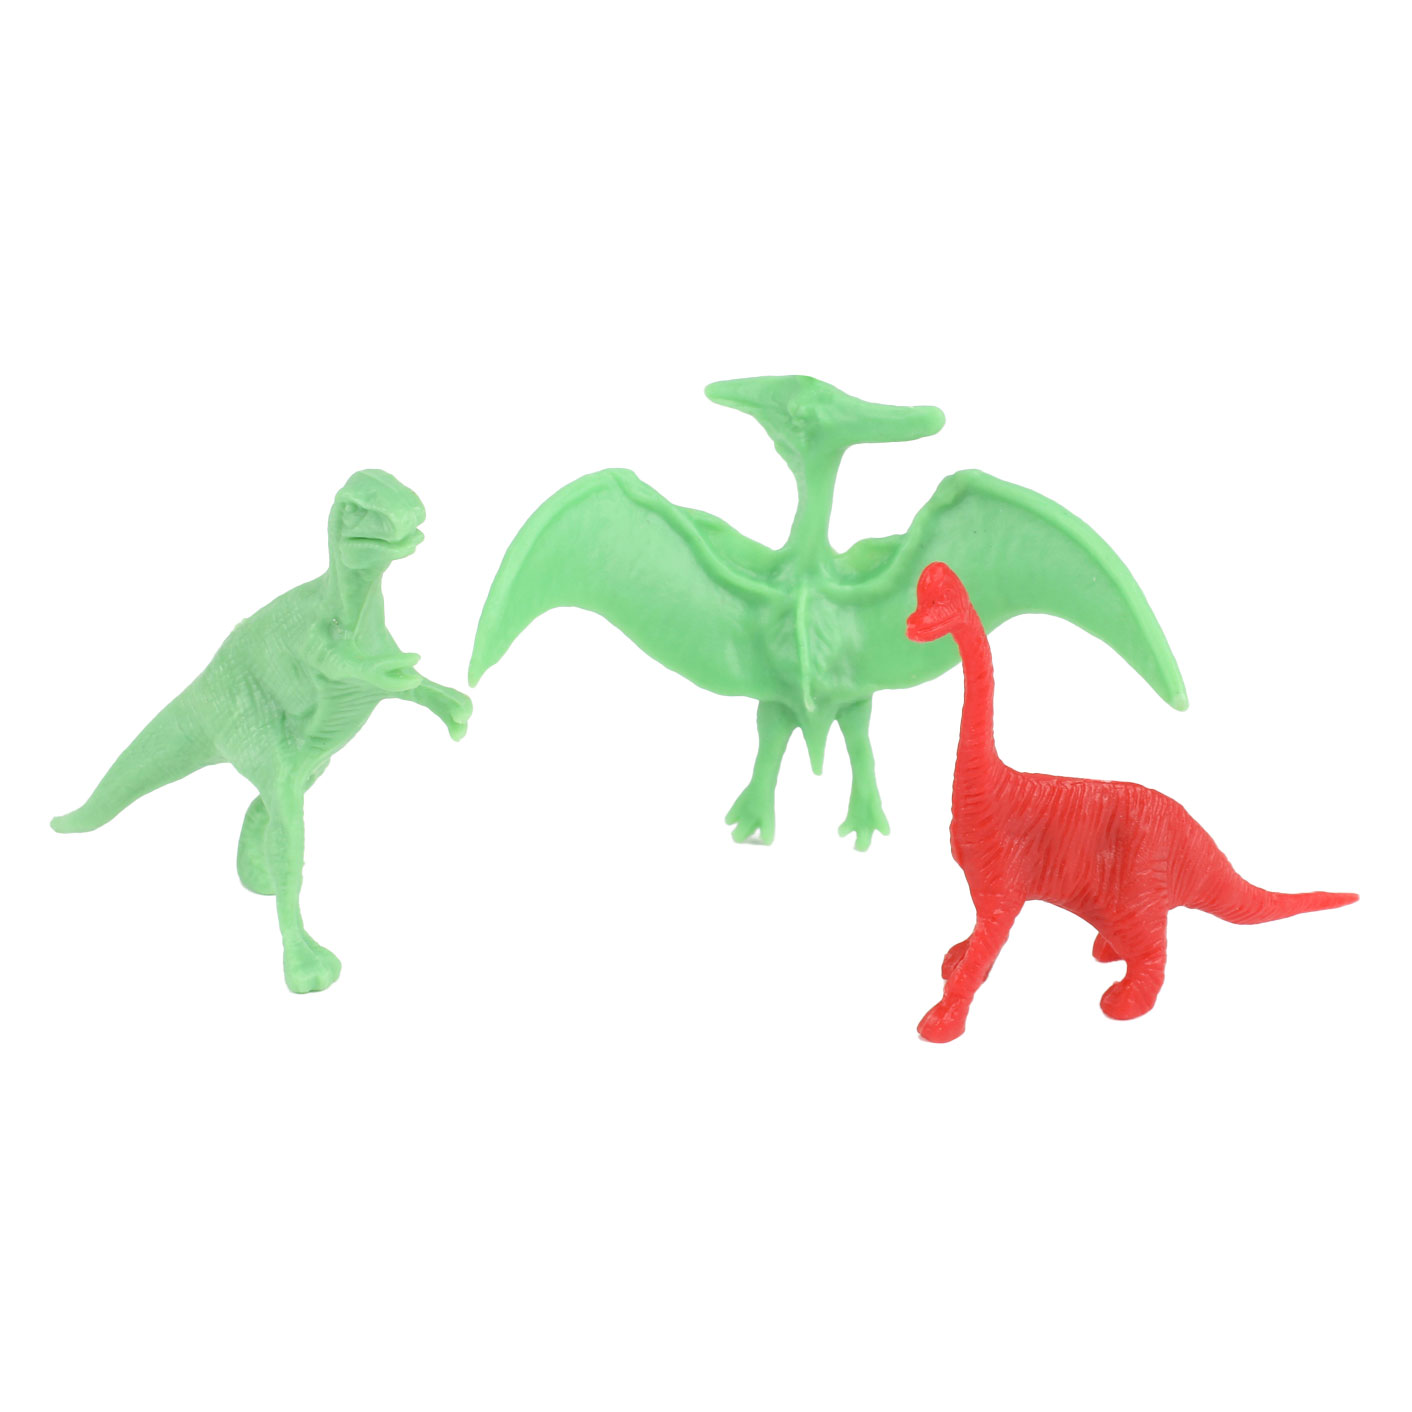 Porte-clés World of Dinosaurs avec mini dinosaures